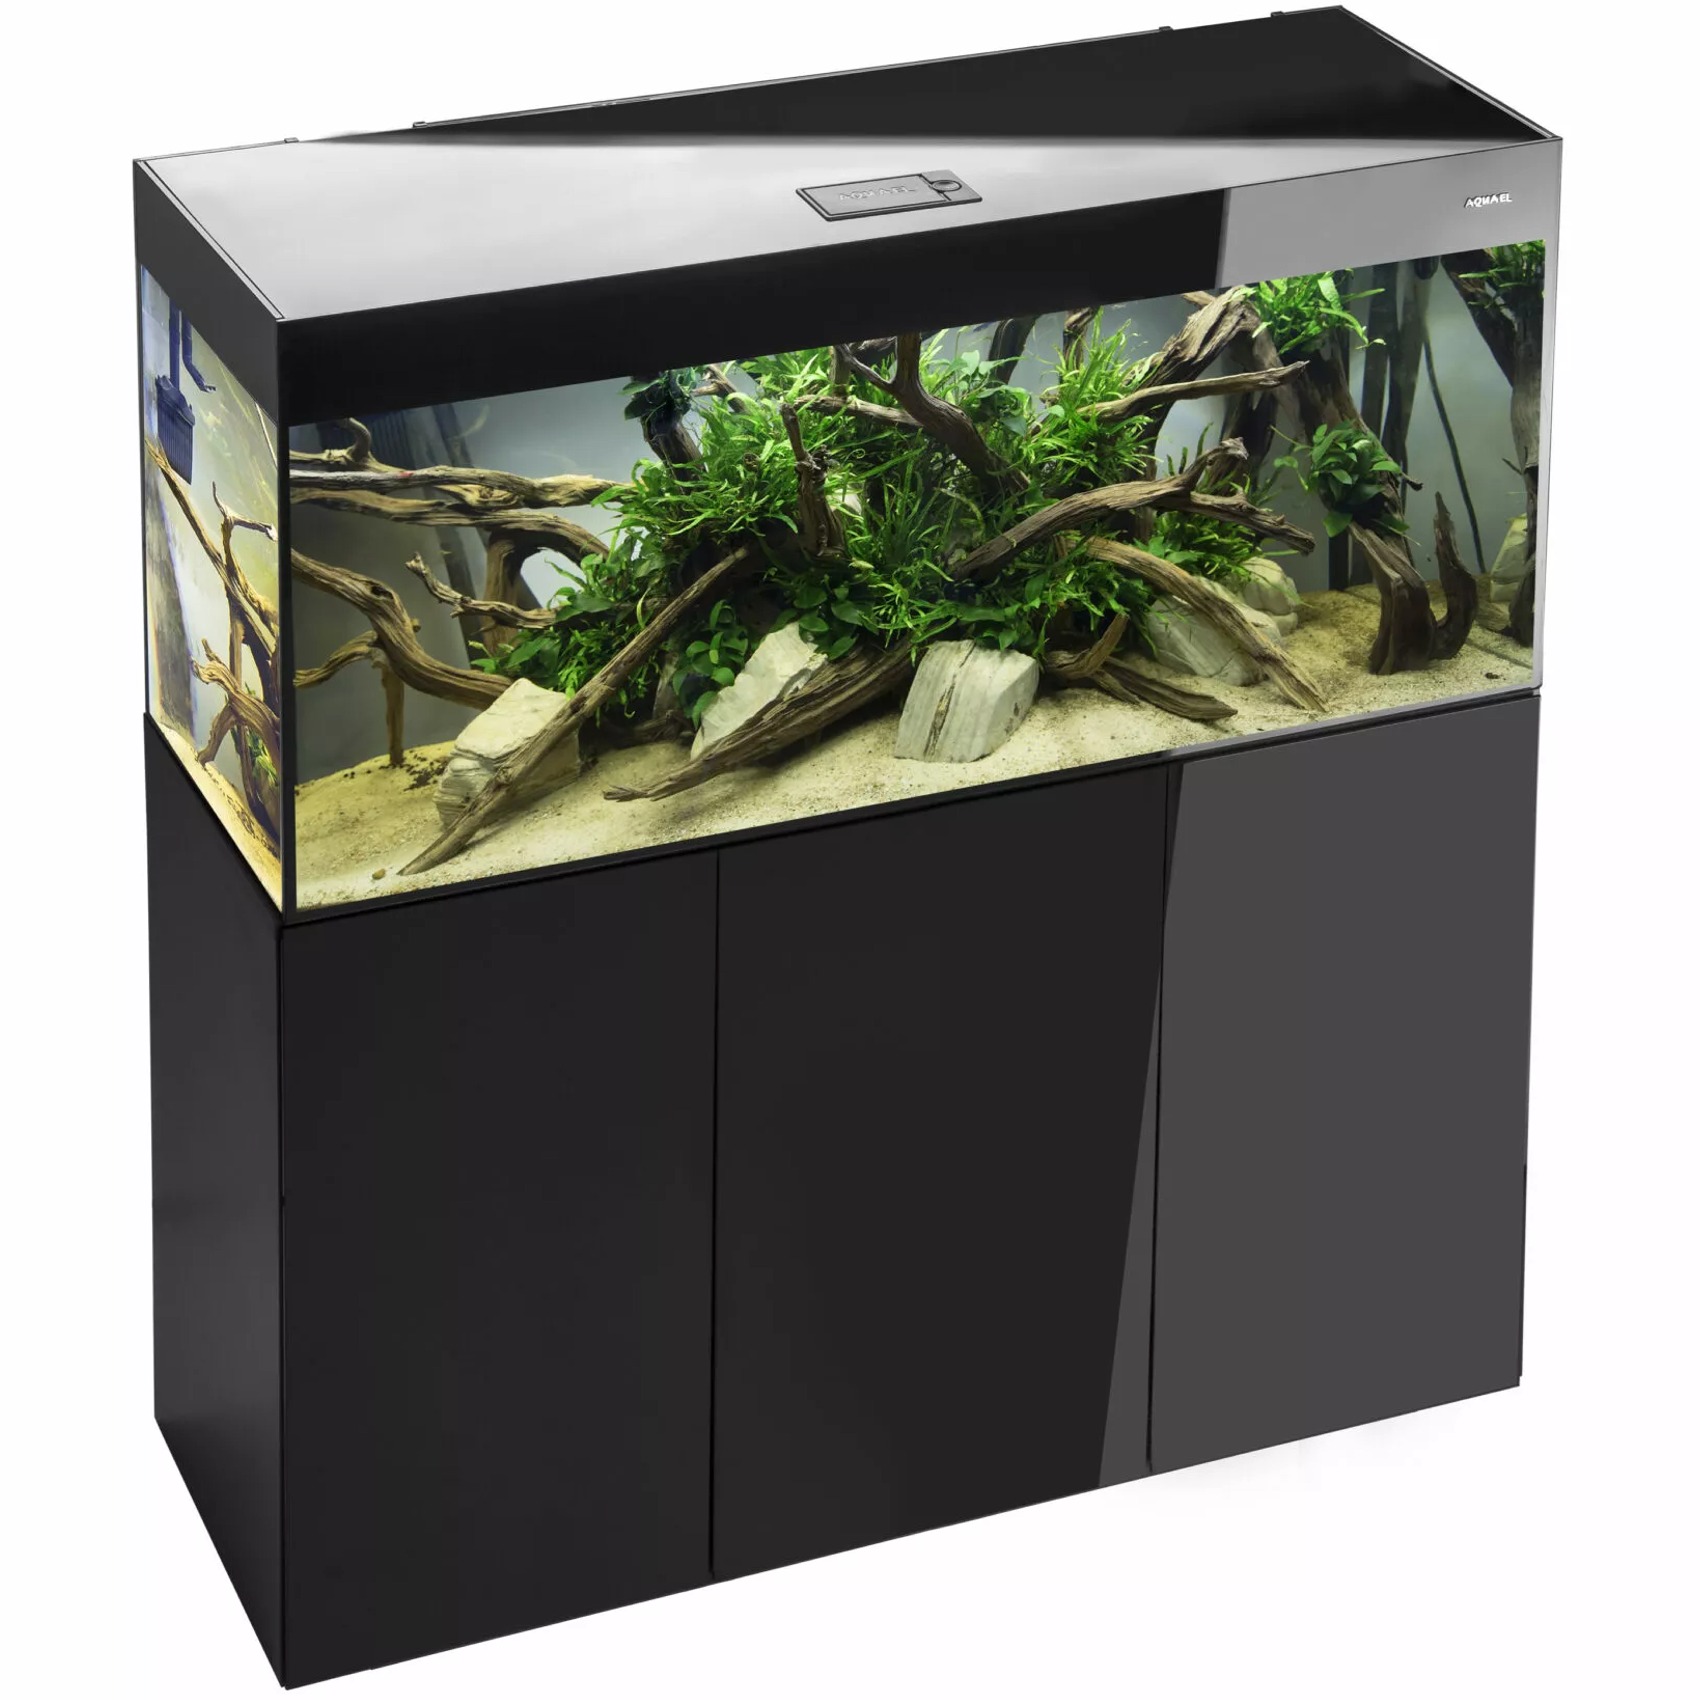 Eclairage Eclairage pour Nano-Aquariums > sera LED light 3 x 2 W pour  aquarium et terrarium pour aquarium - 57.89€